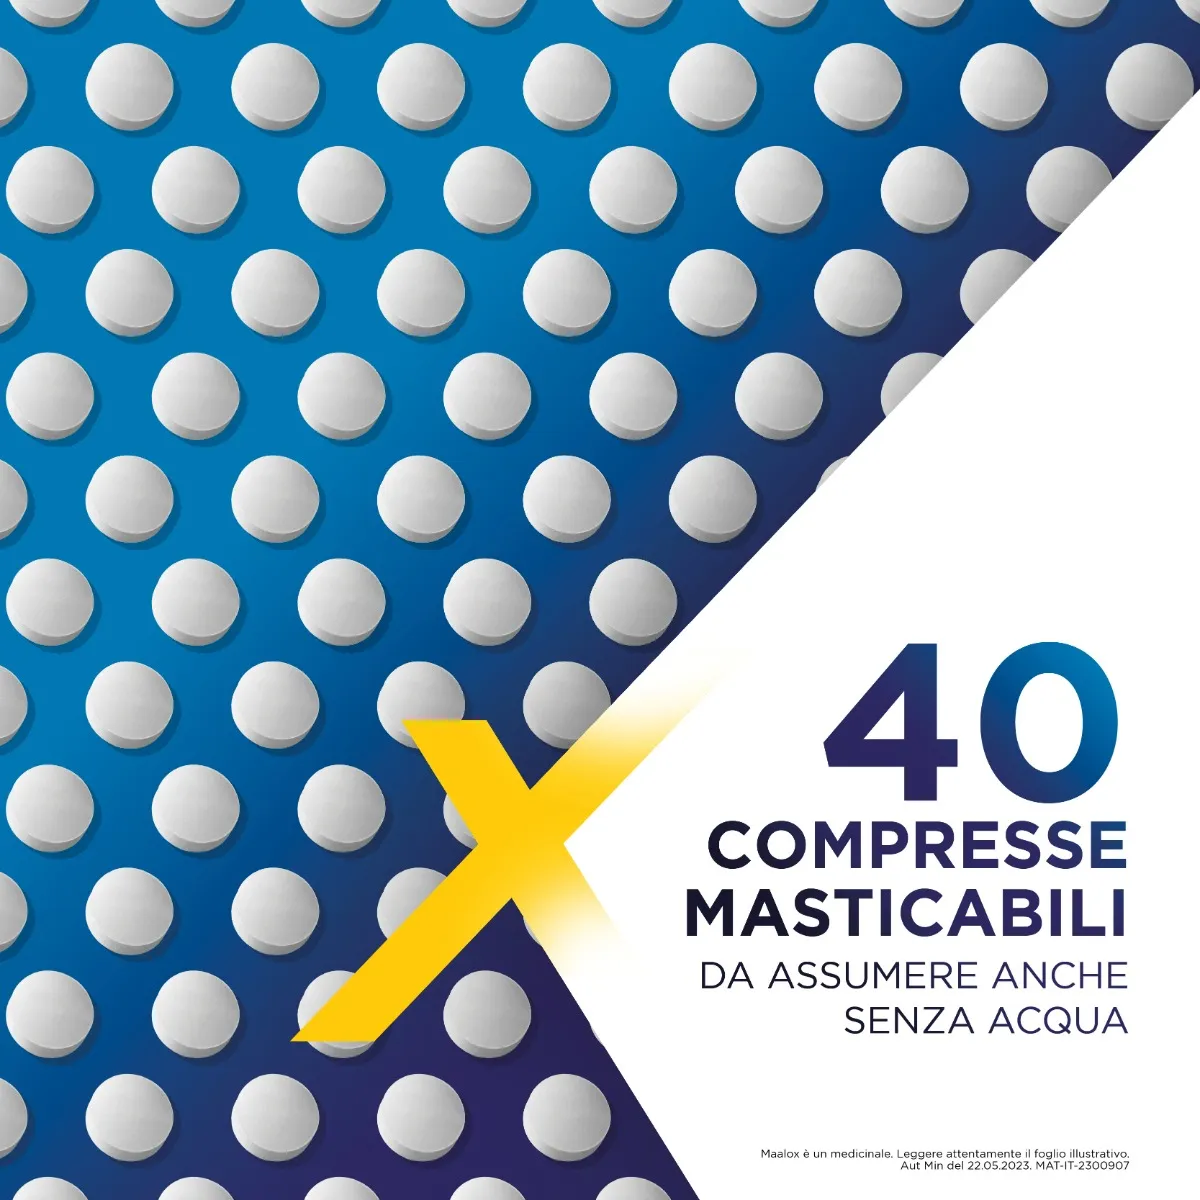 Maalox Compresse 40 Compresse Masticabili Antiacido